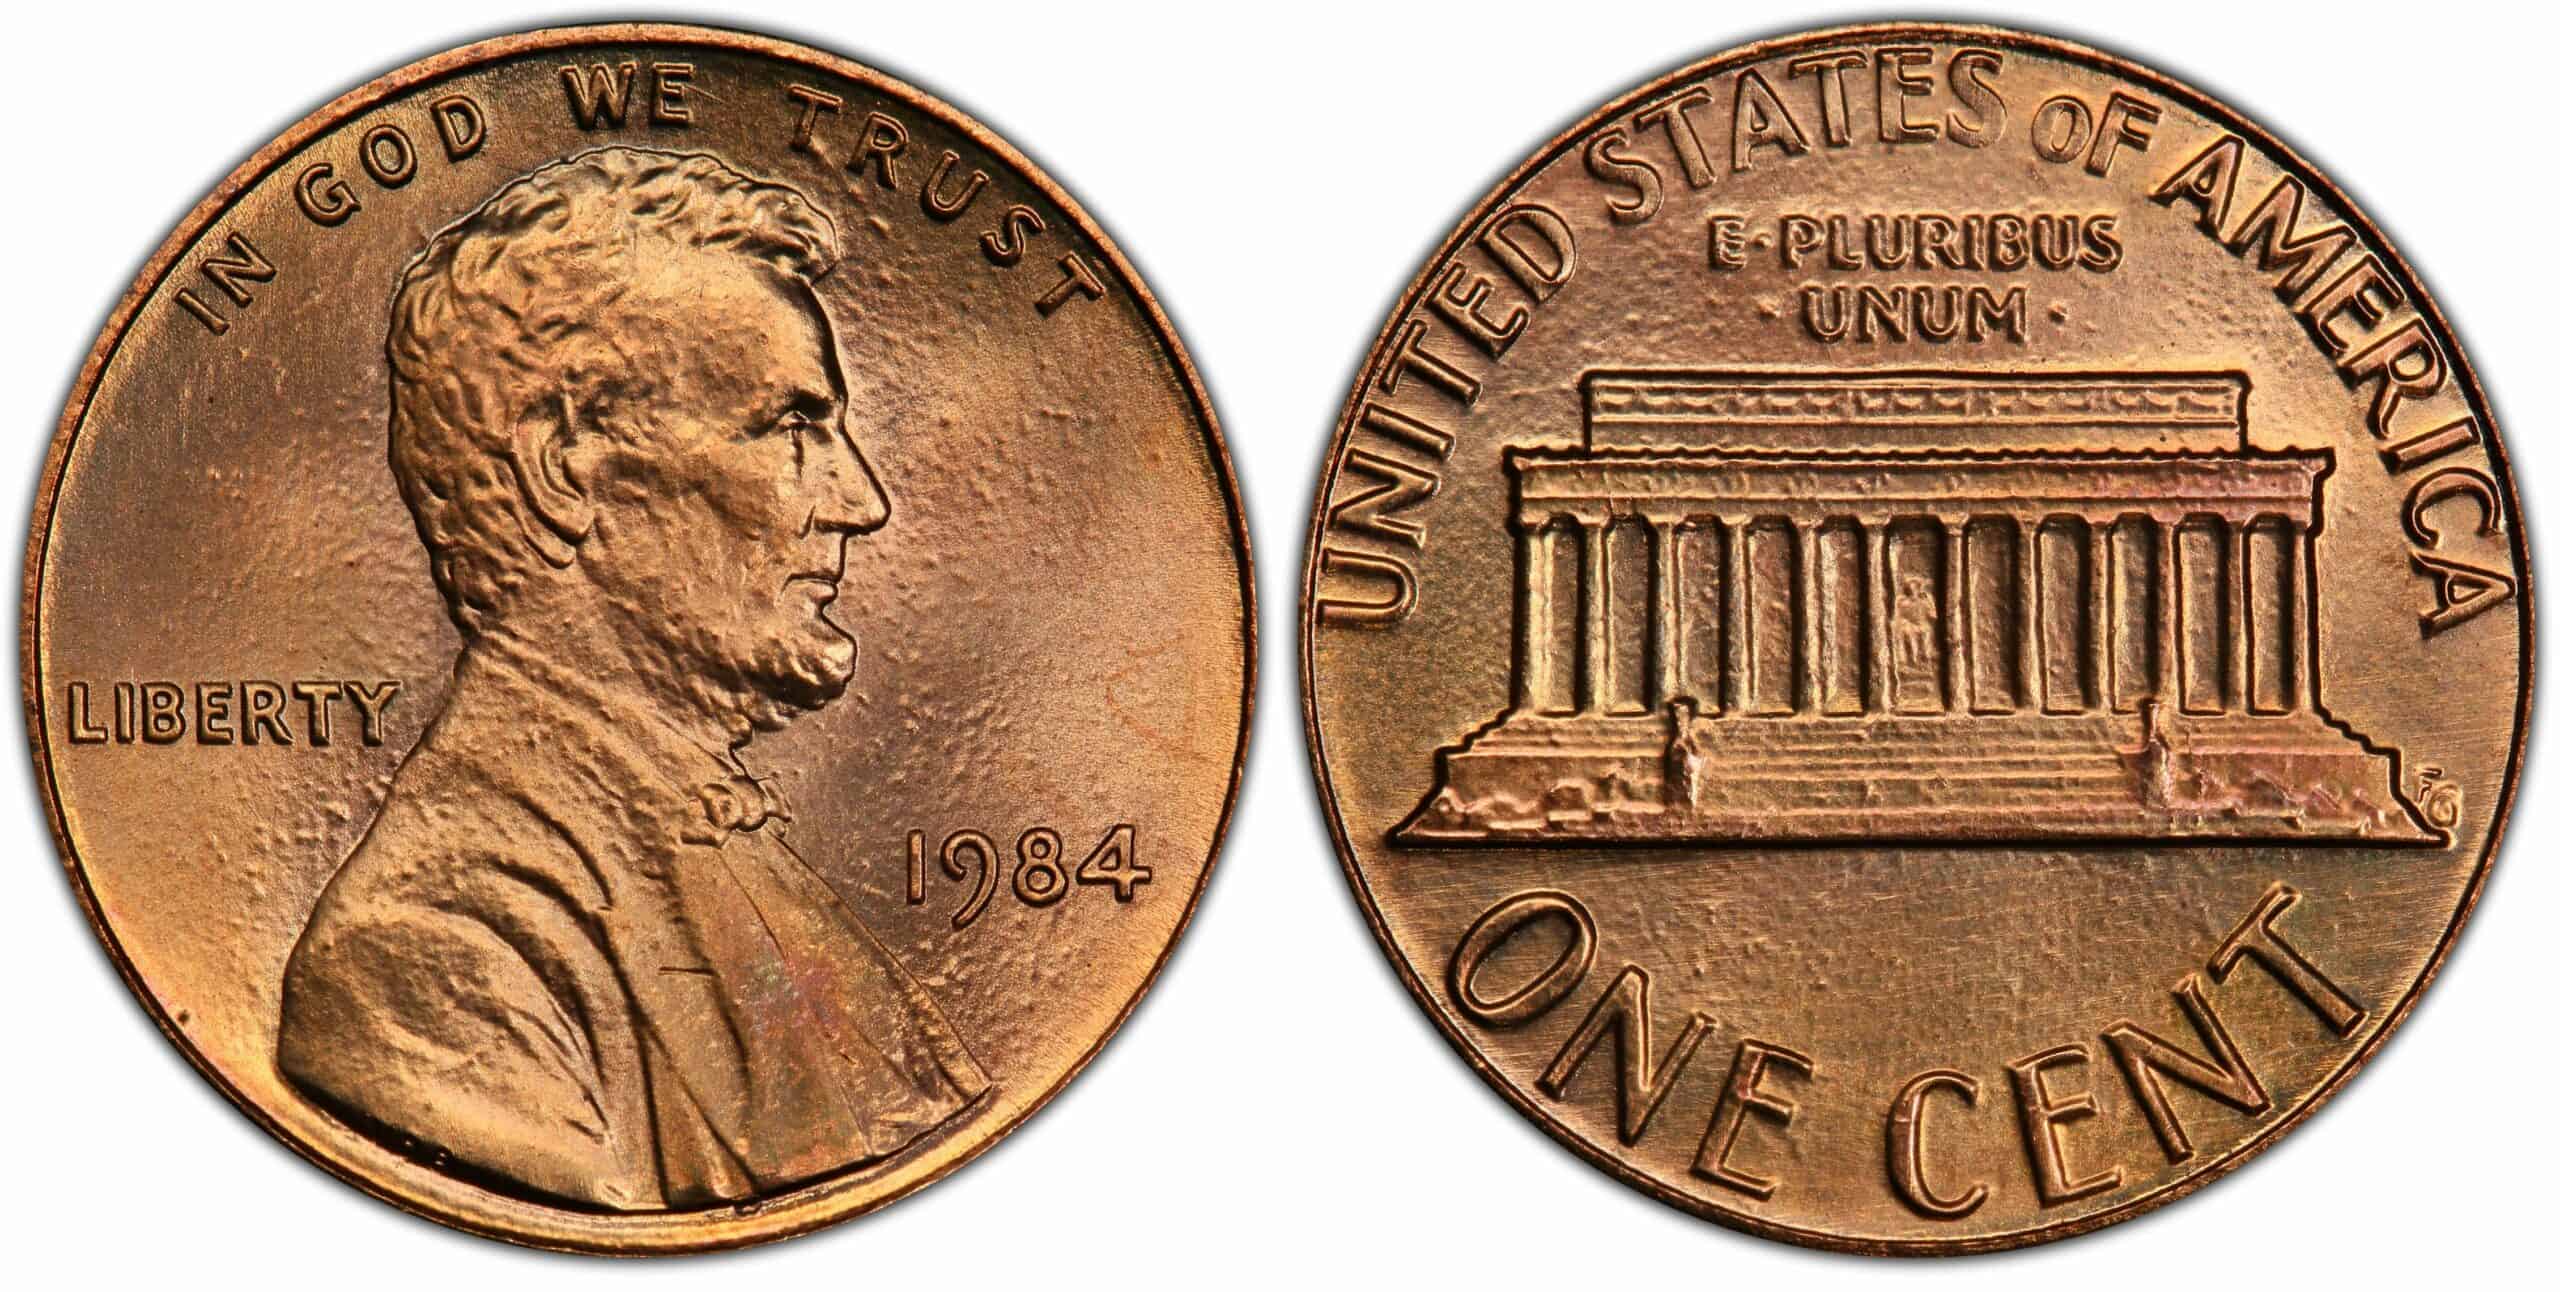 1984 Penny Value Details